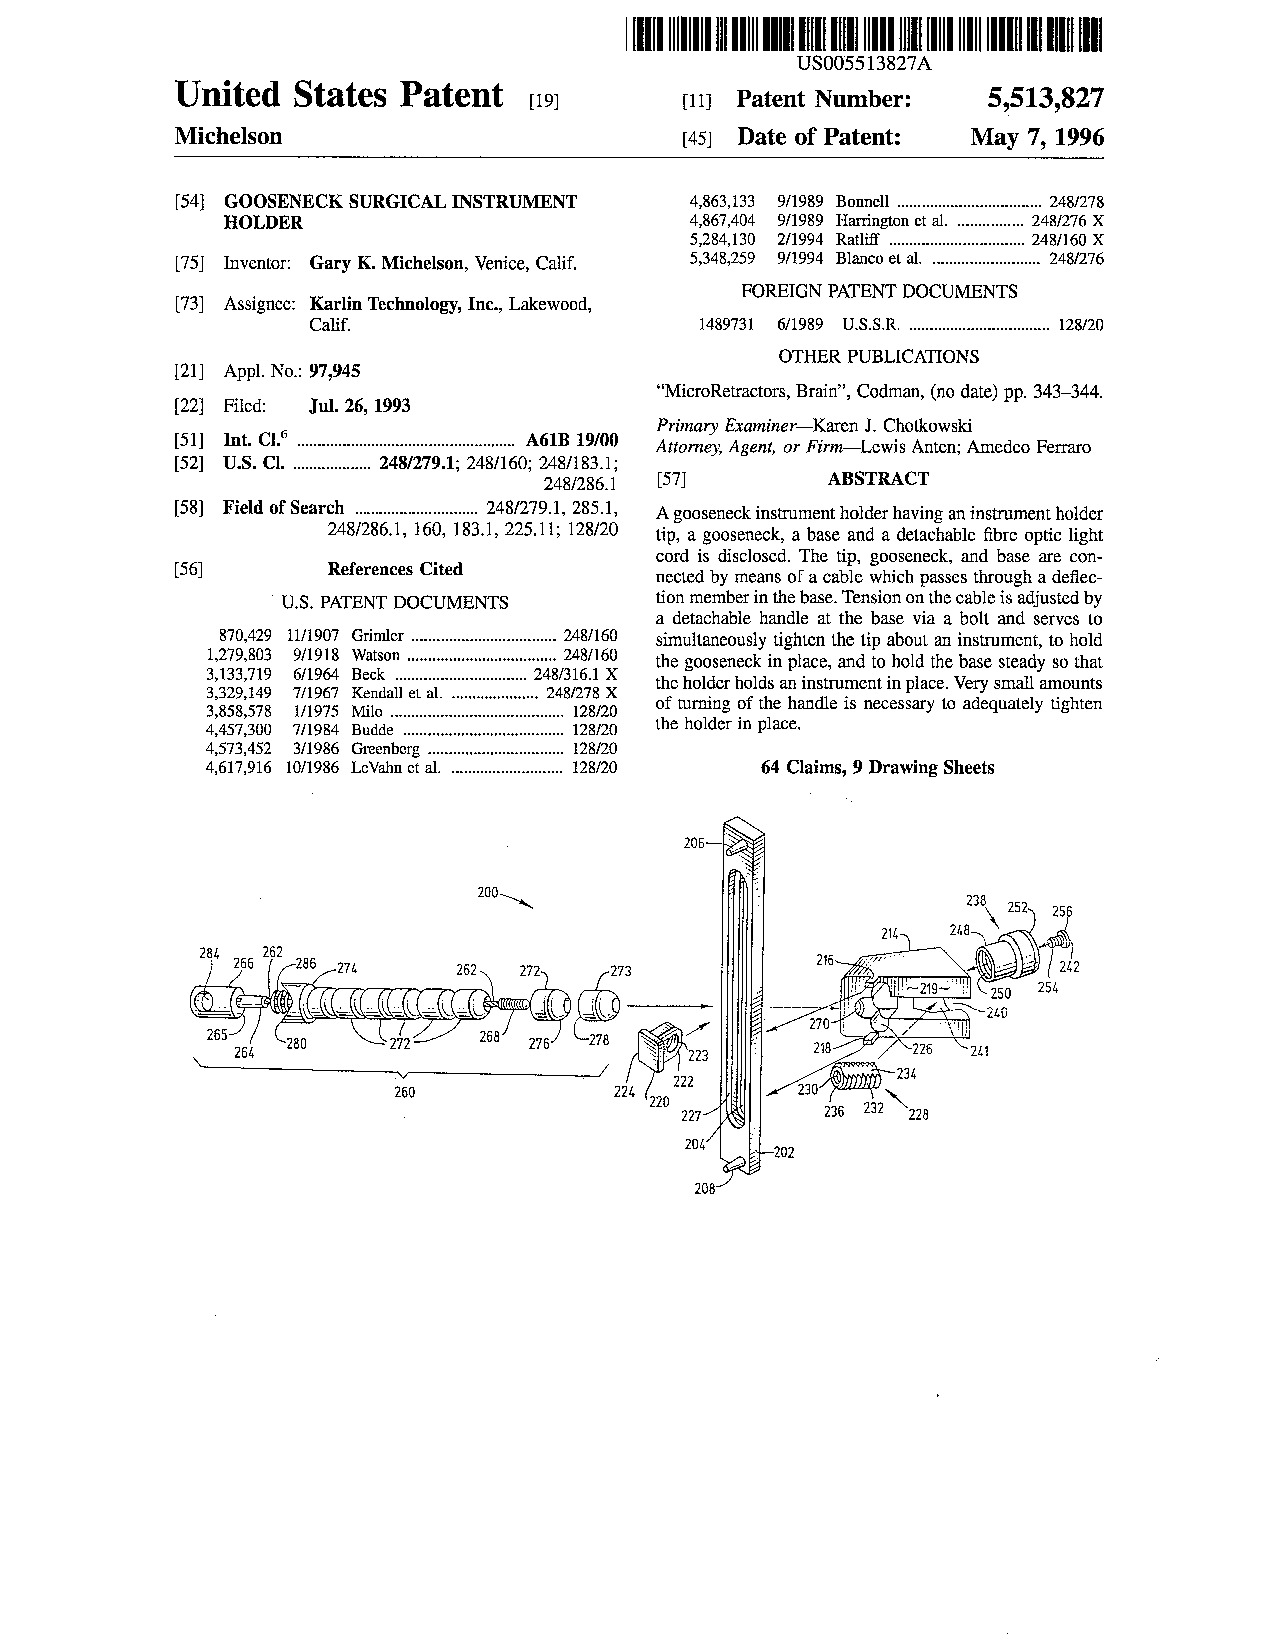 Gooseneck surgical instrument holder - Patent 5,513,827